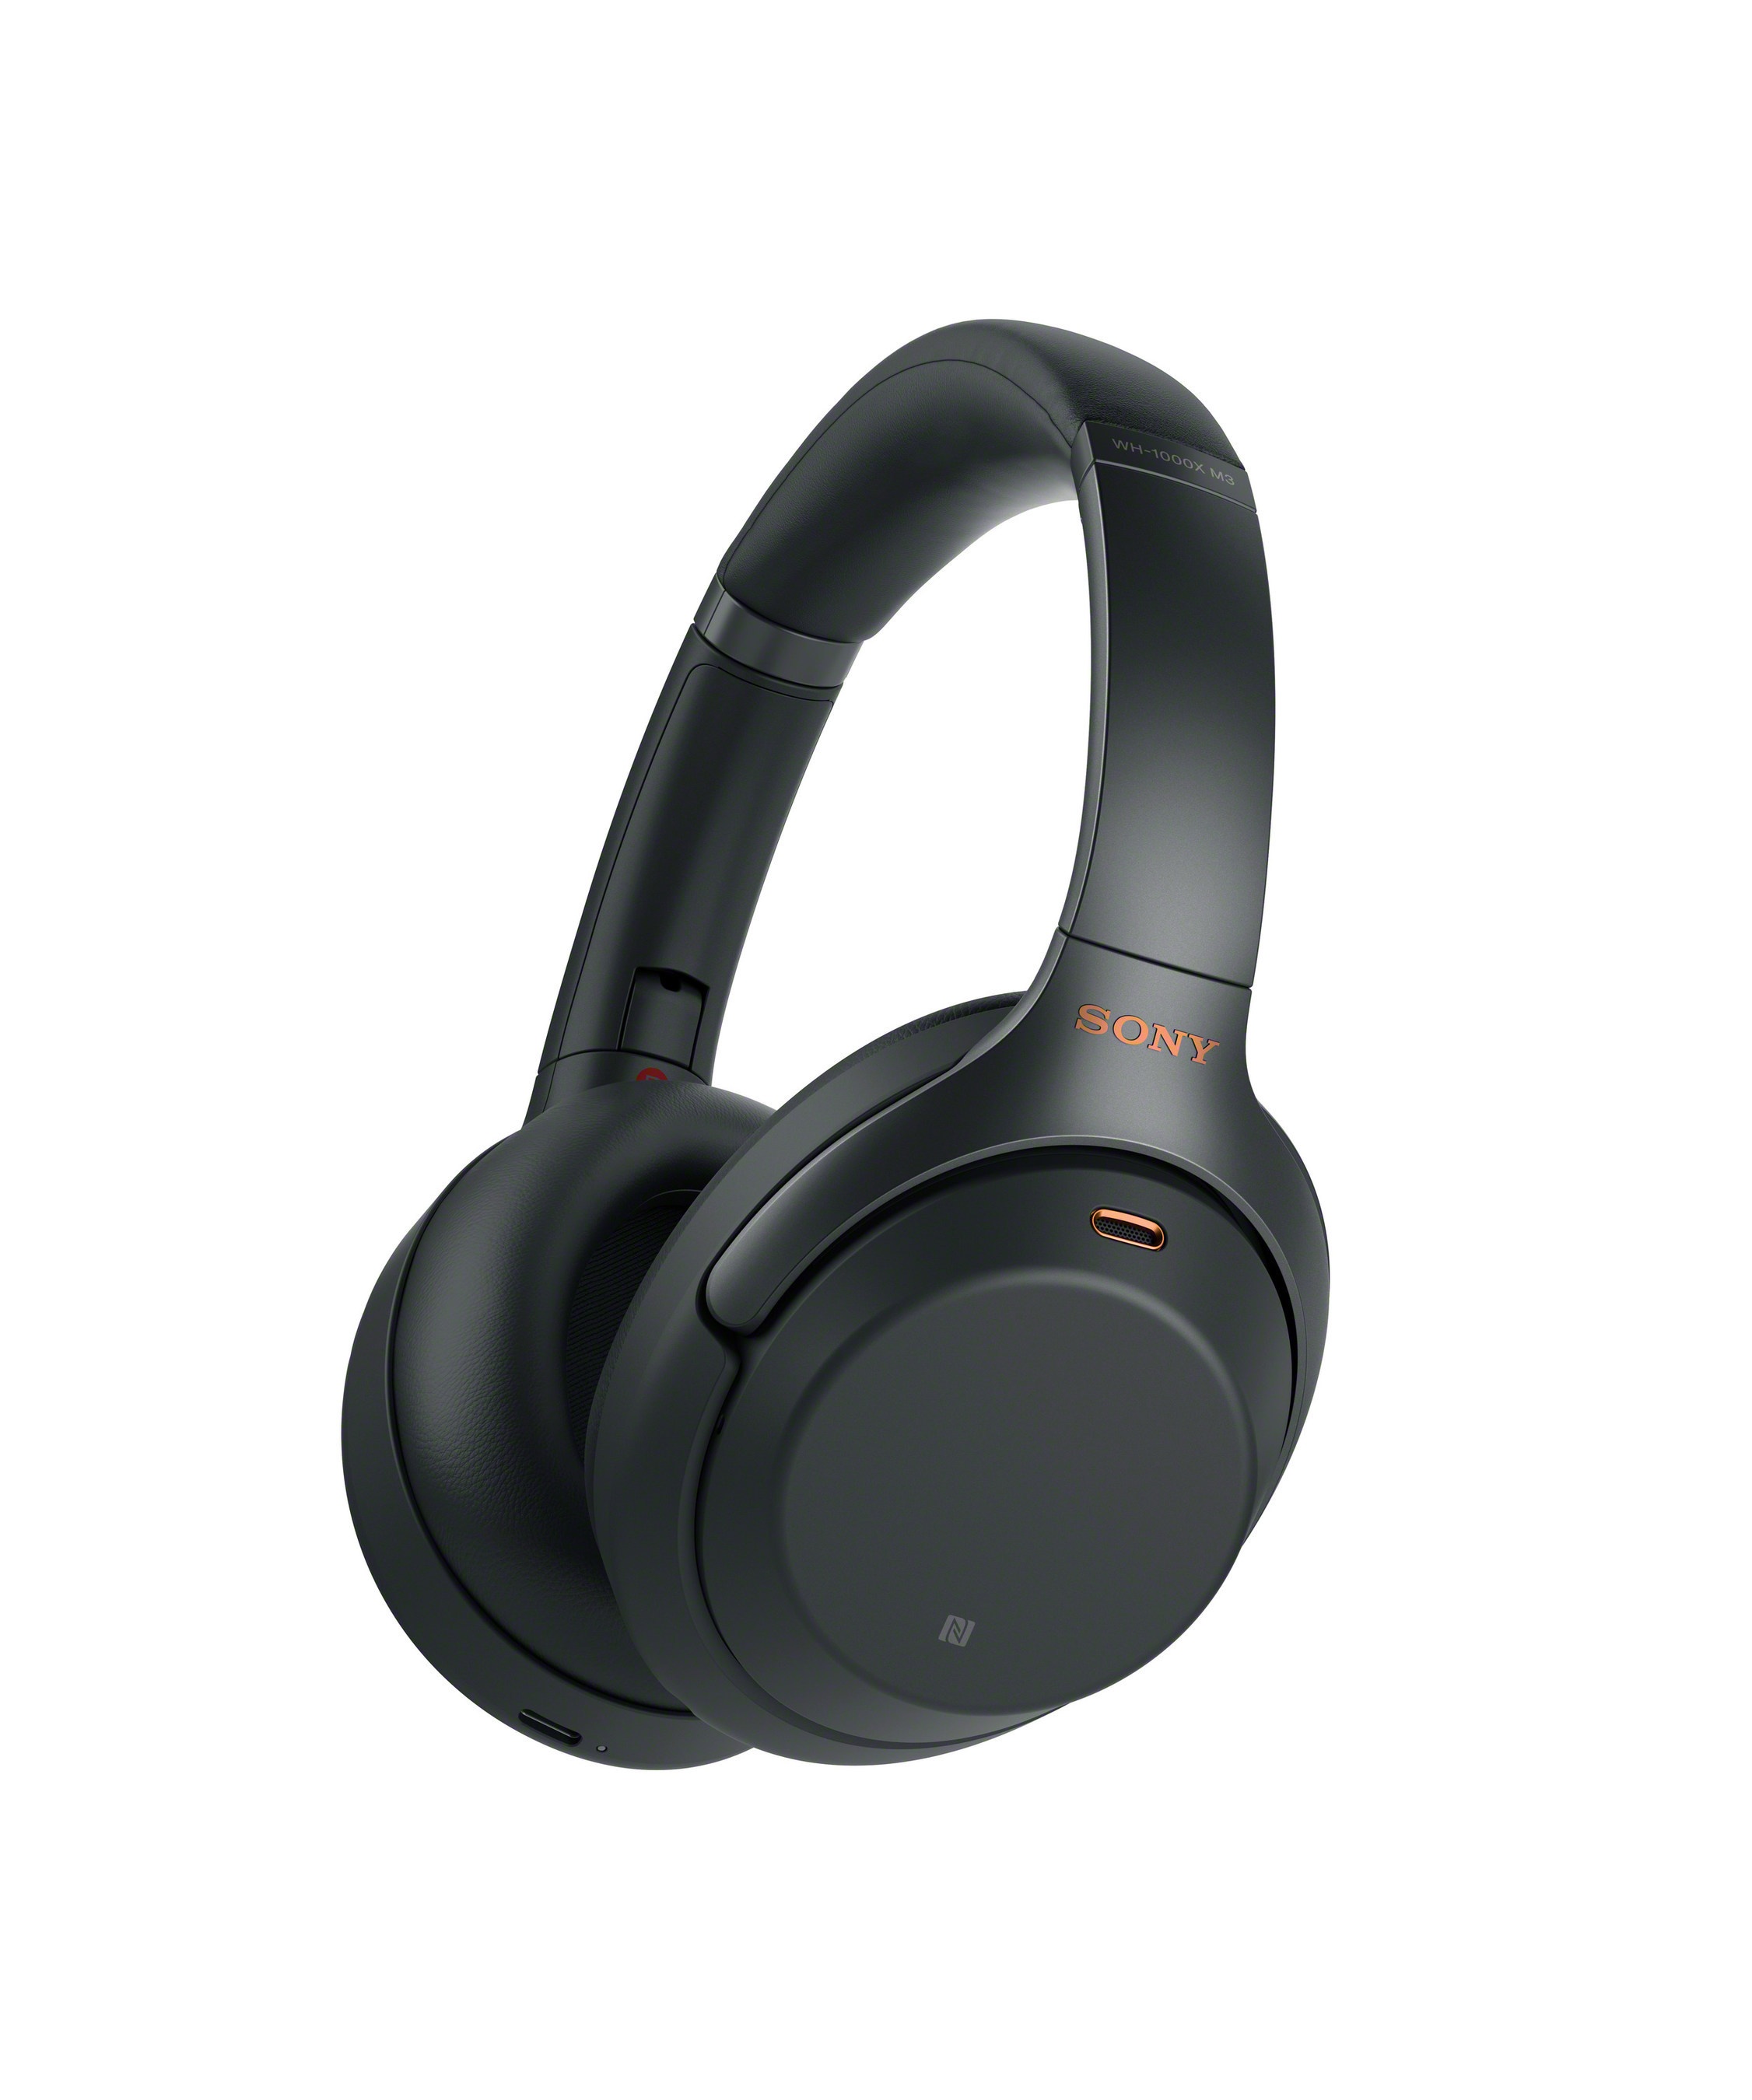 Sony’s Wireless Noise-canceling Headphones Now Compatible with Amazon Alexa